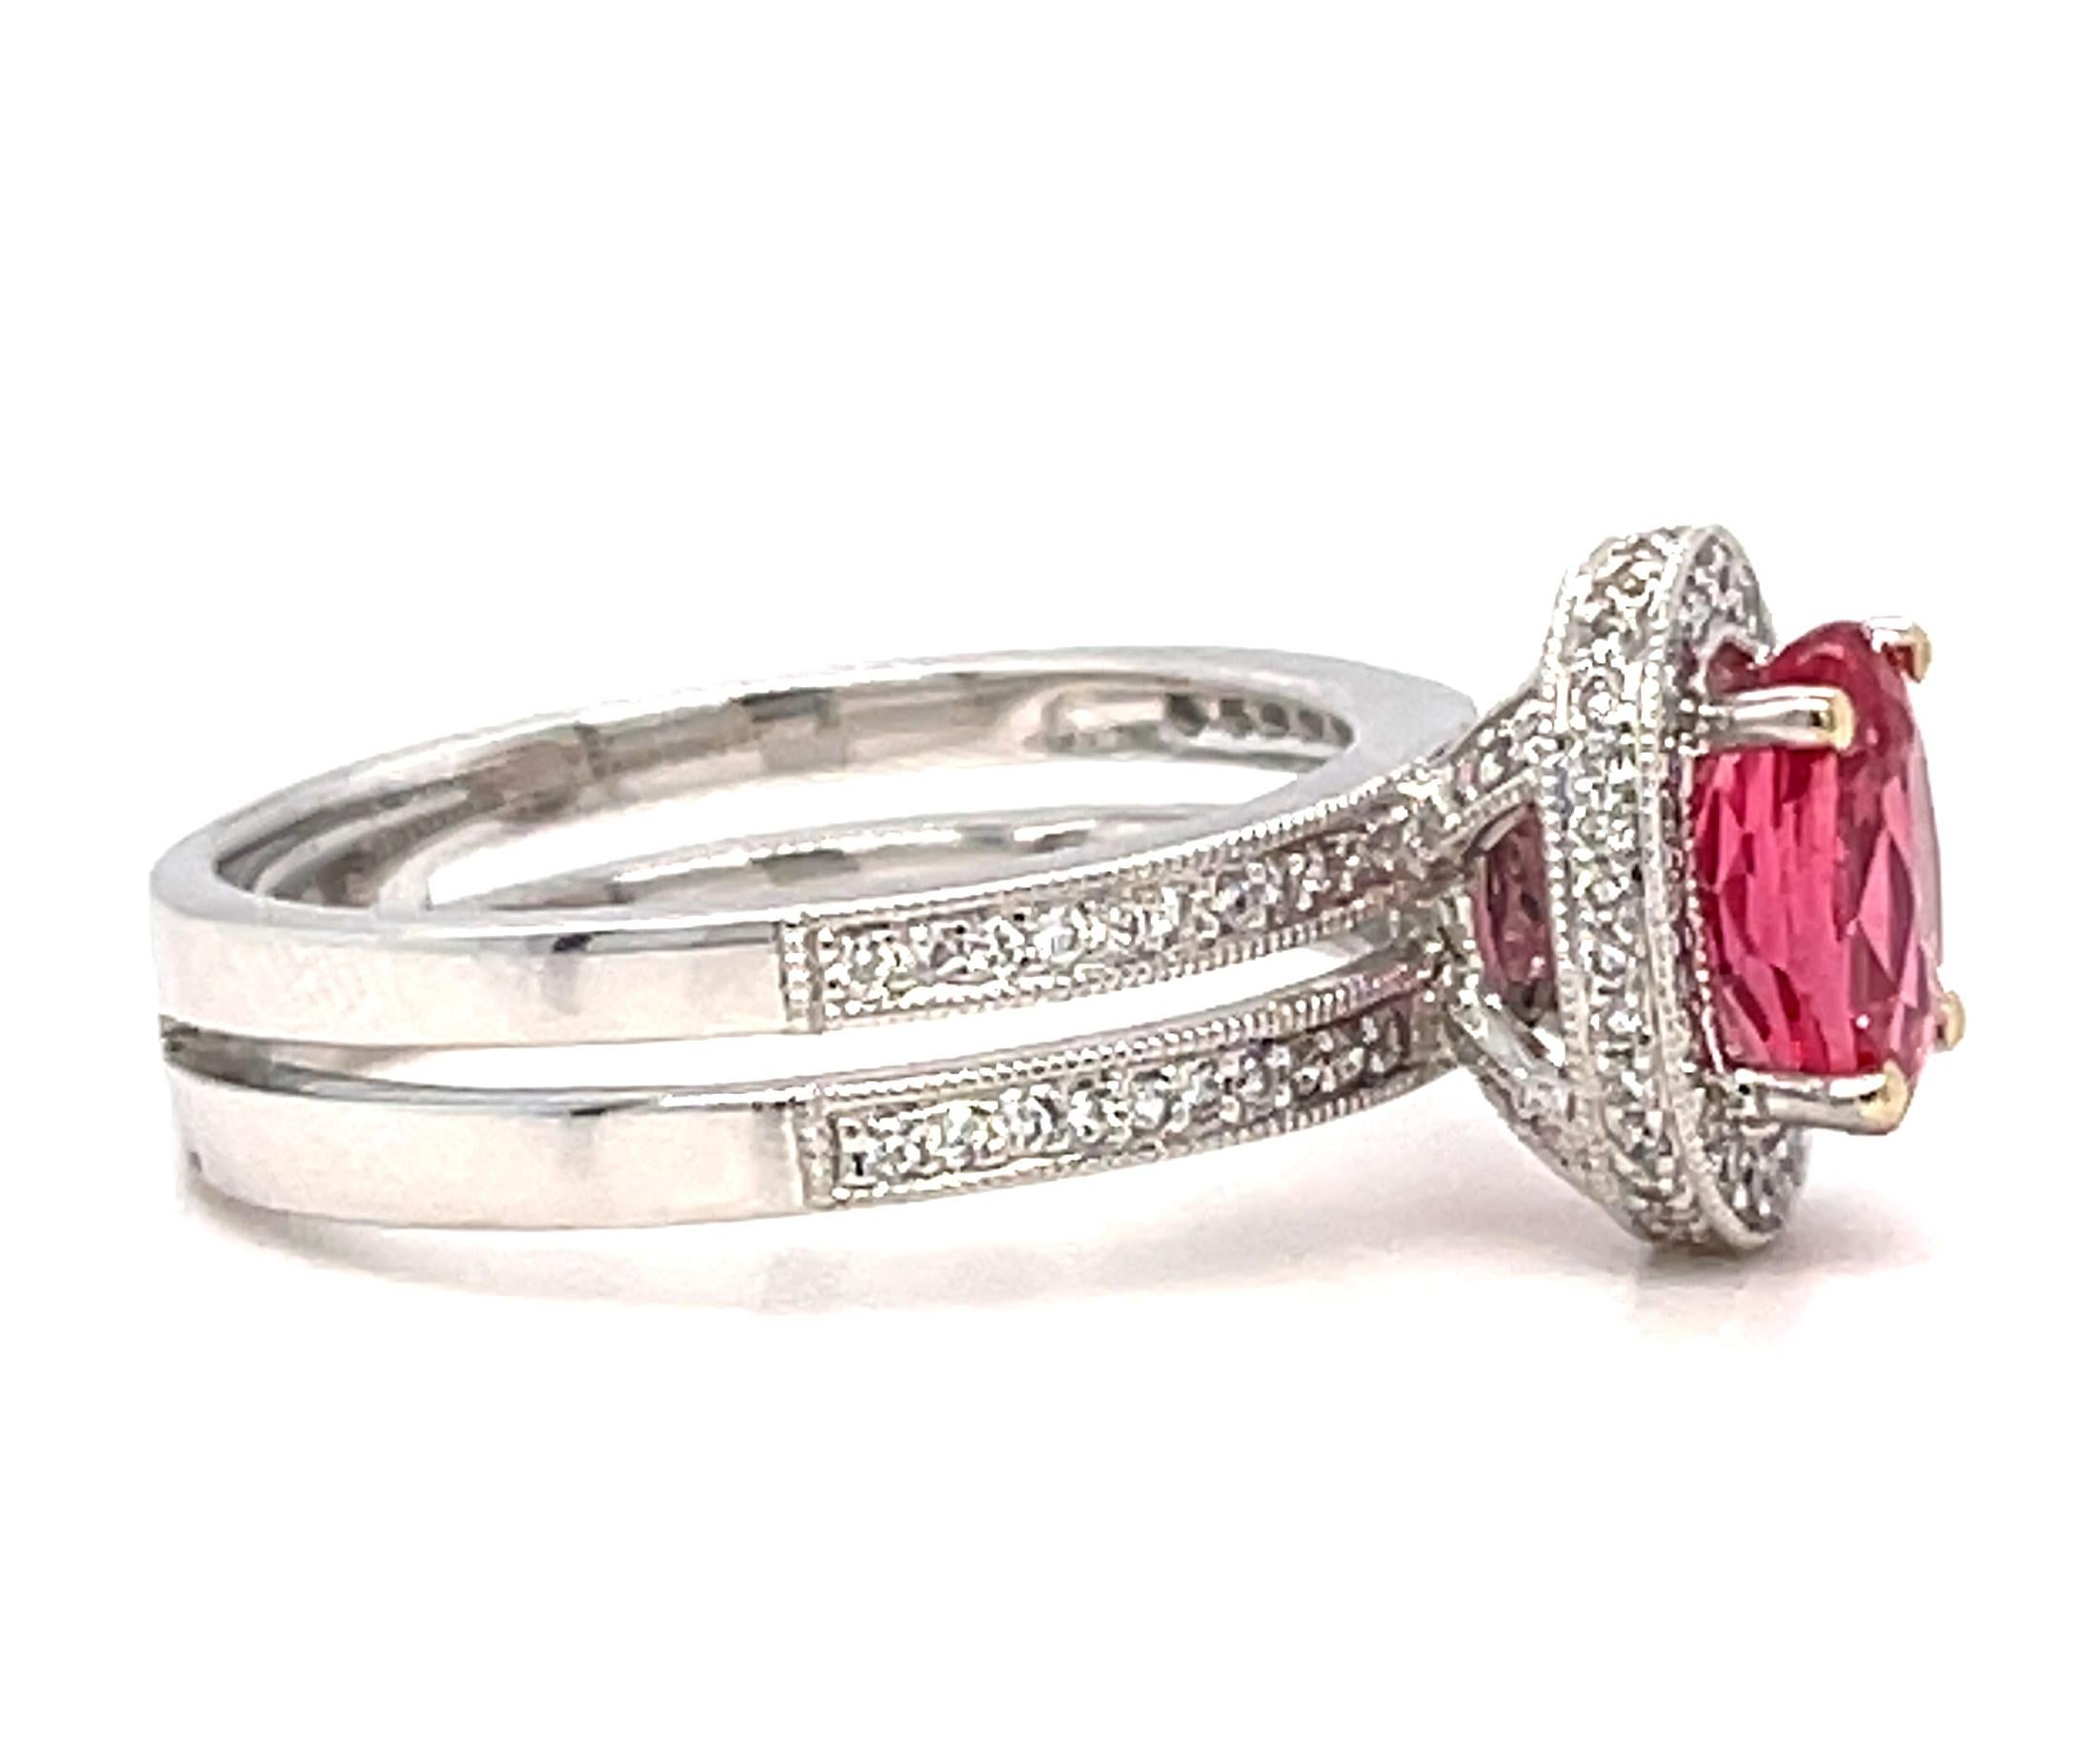 pink diamond rings